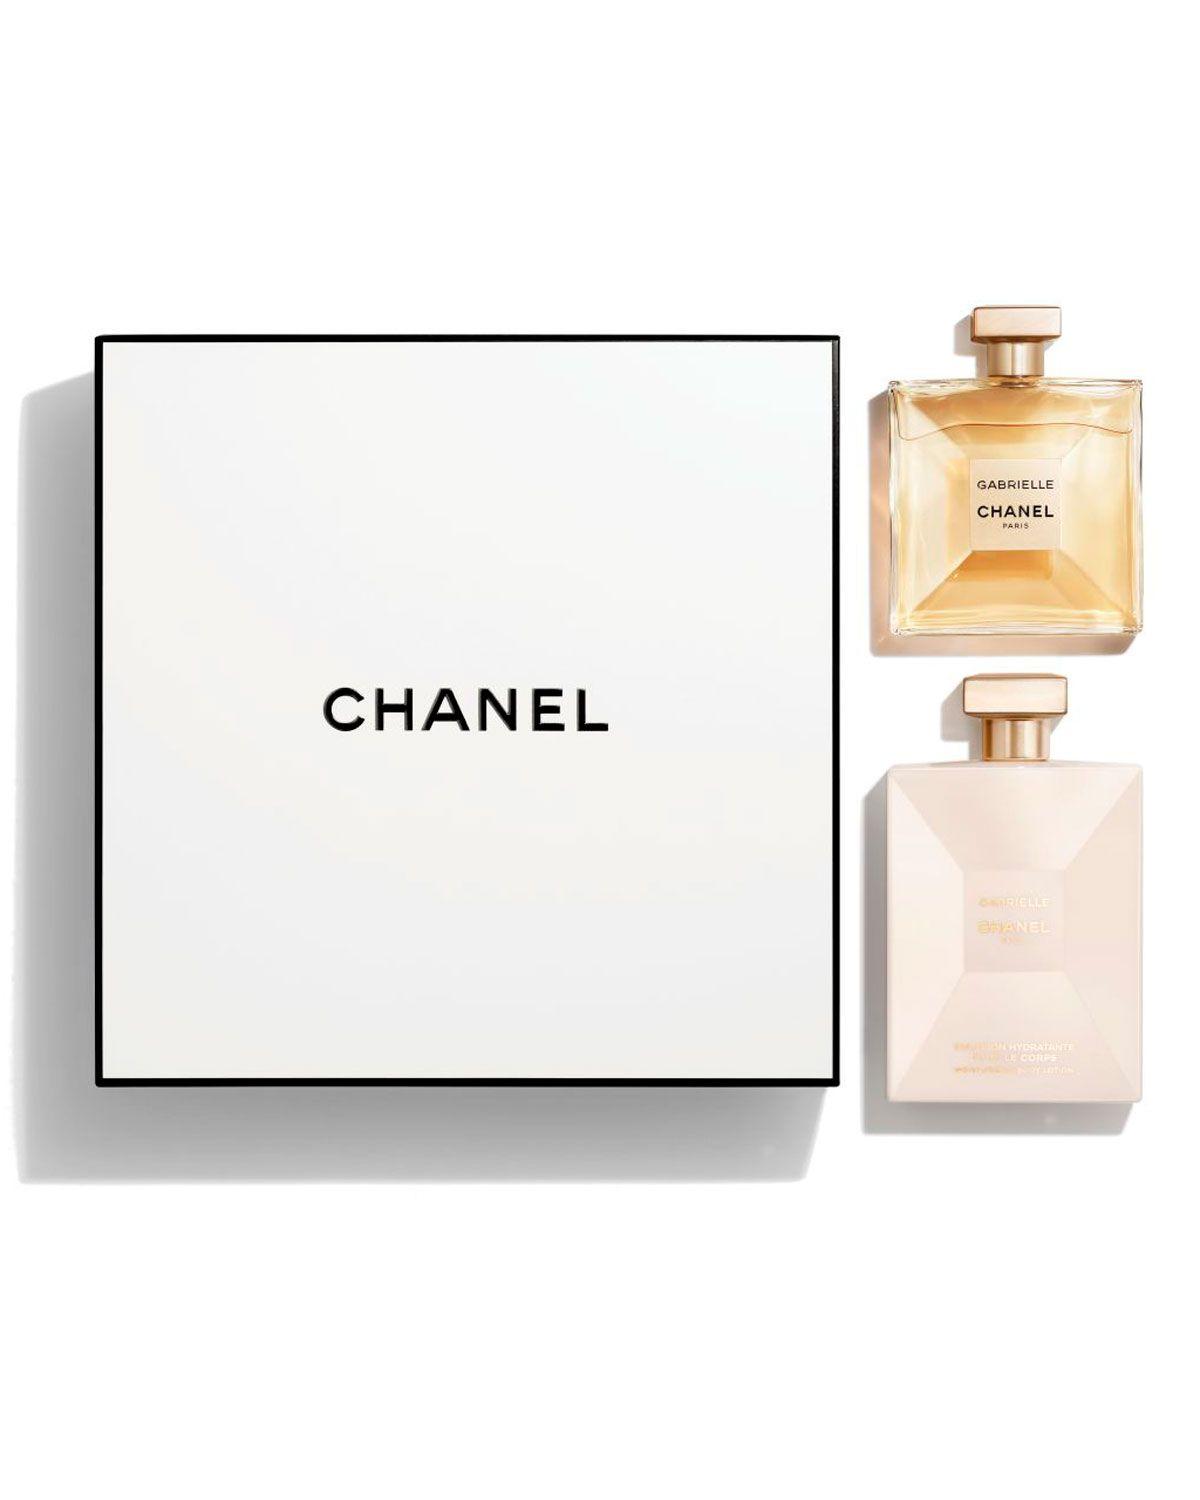 Gabrielle Chanel Paris Logo - CHANEL GABRIELLE CHANEL BODY LOTION SET | Neiman Marcus